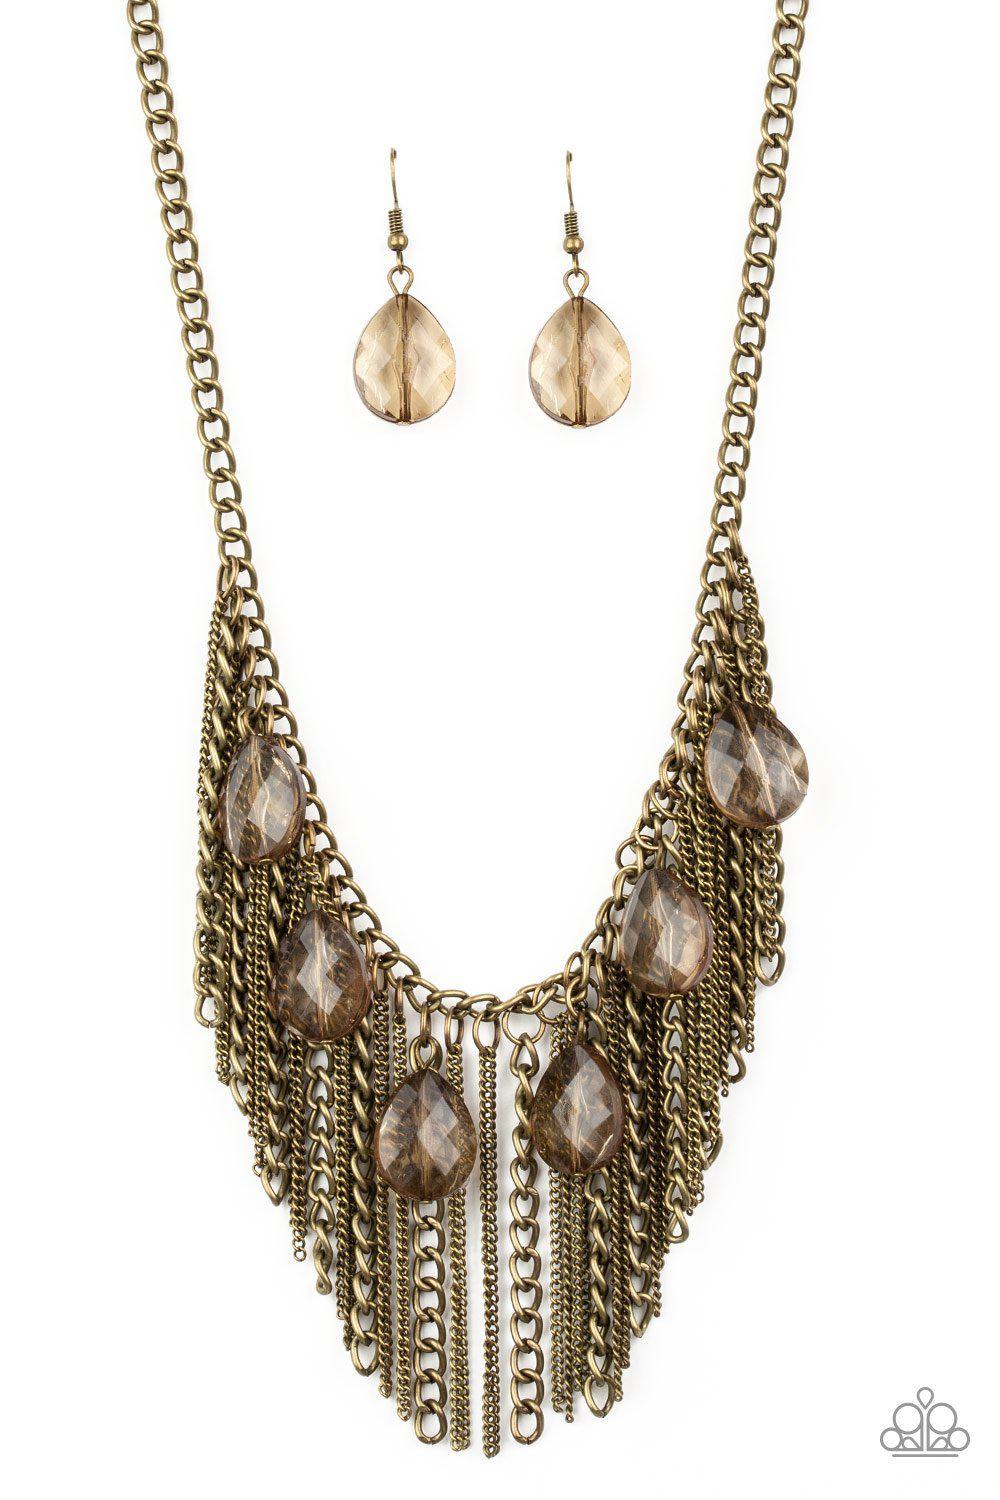 Vixen Conviction Brass Necklace - Paparazzi Accessories - lightbox -CarasShop.com - $5 Jewelry by Cara Jewels